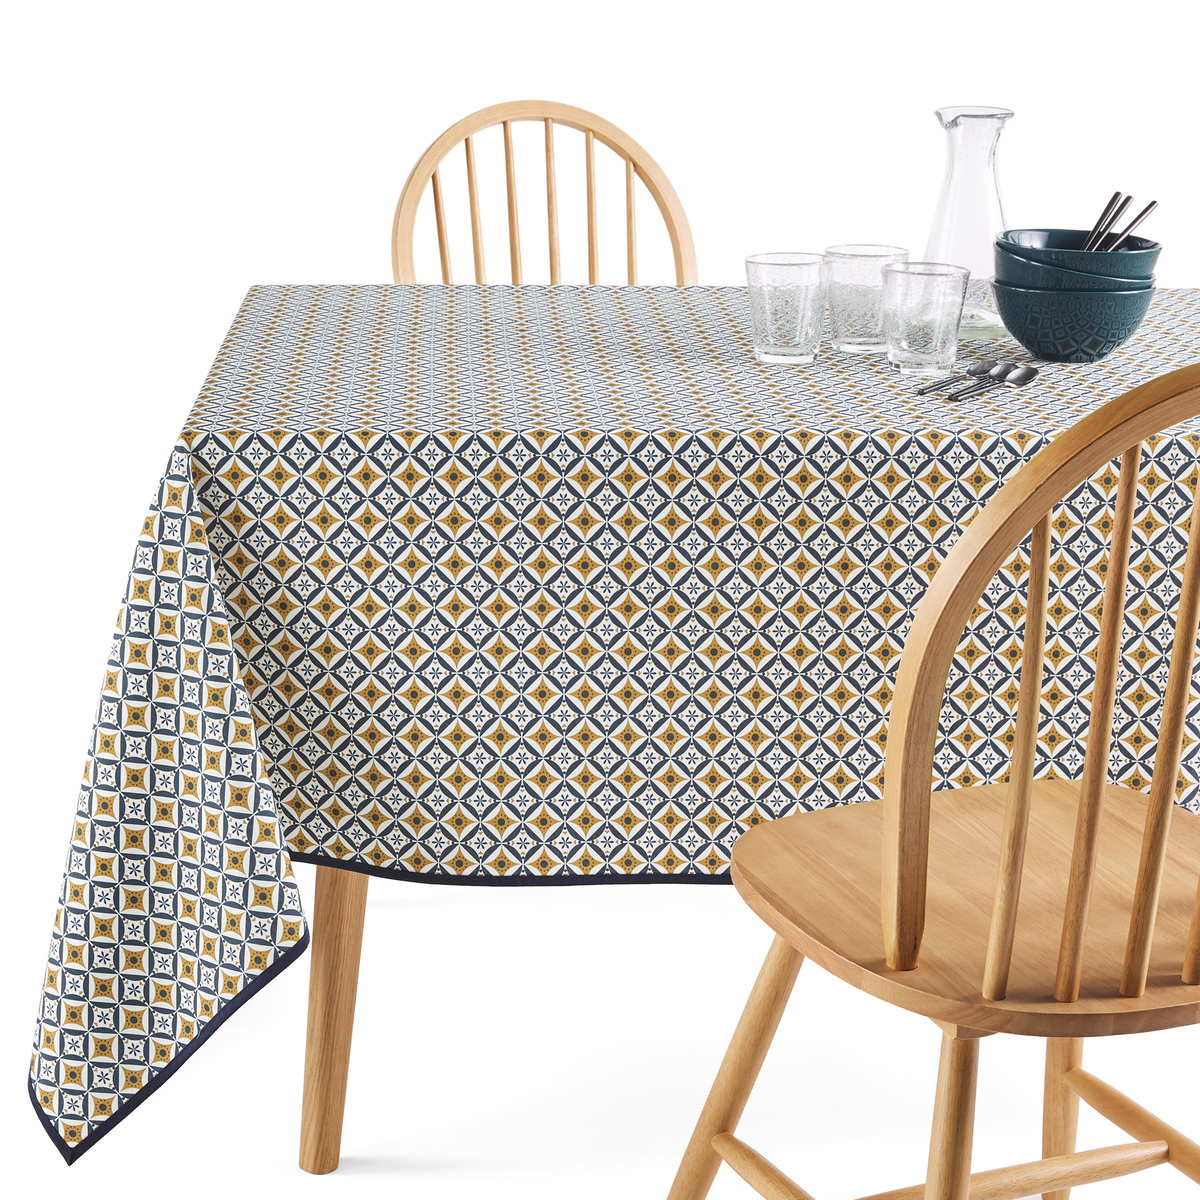 Florene Anti-stain tablecloth